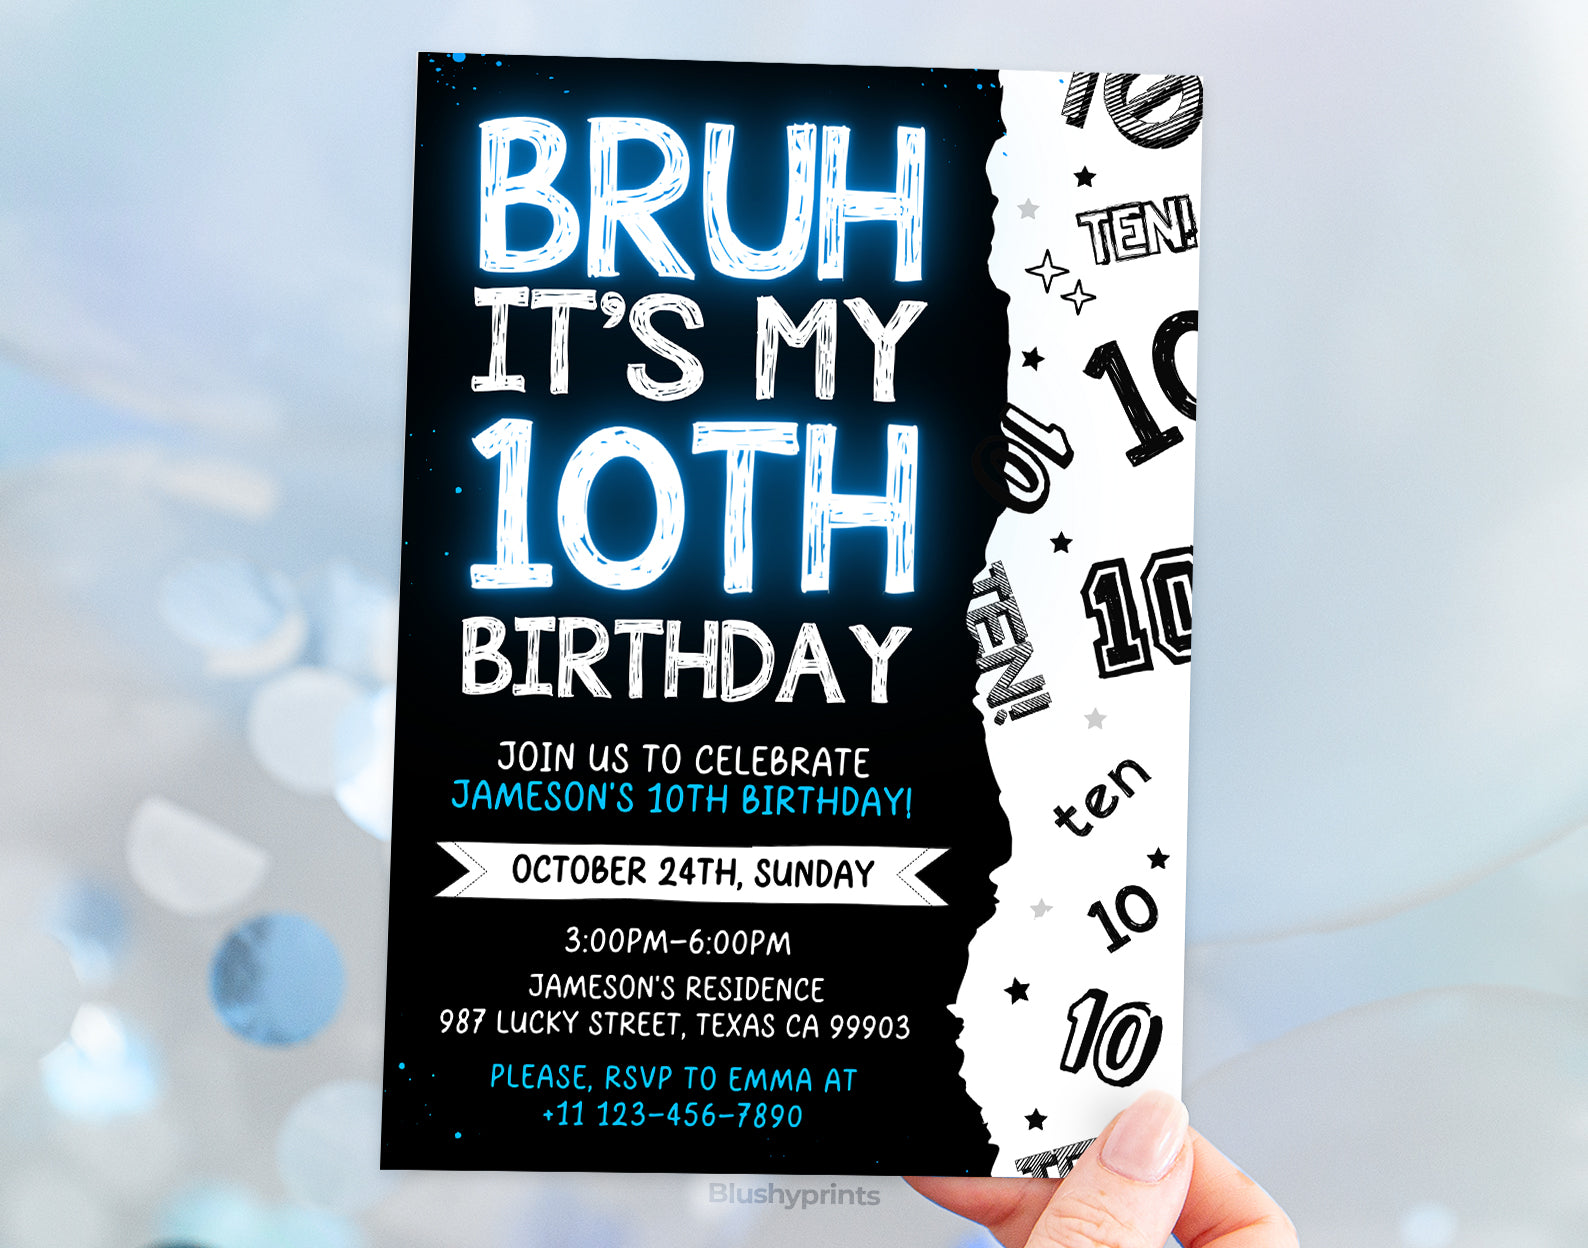 10th Bruh Birthday Invitation, Bruh its my birthday Invitation Etemply